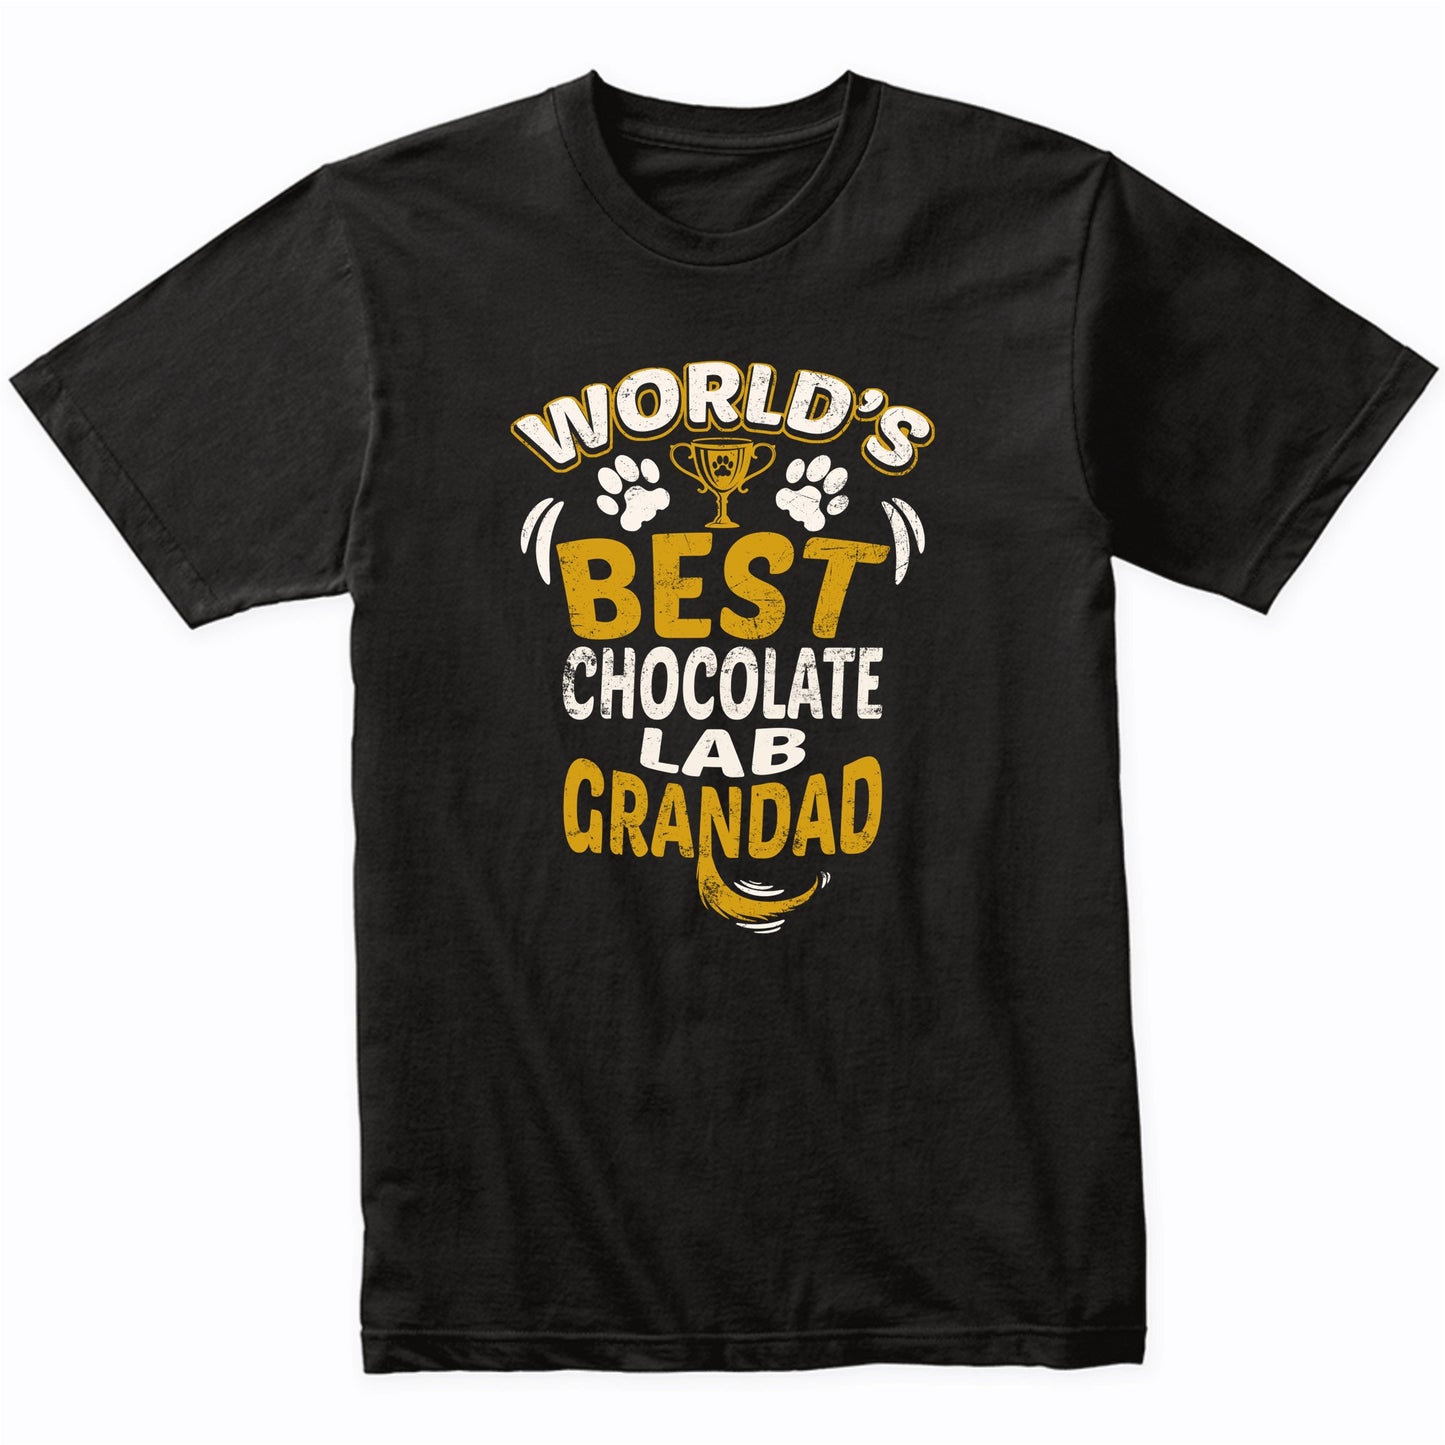 World's Best Chocolate Lab Grandad Graphic T-Shirt